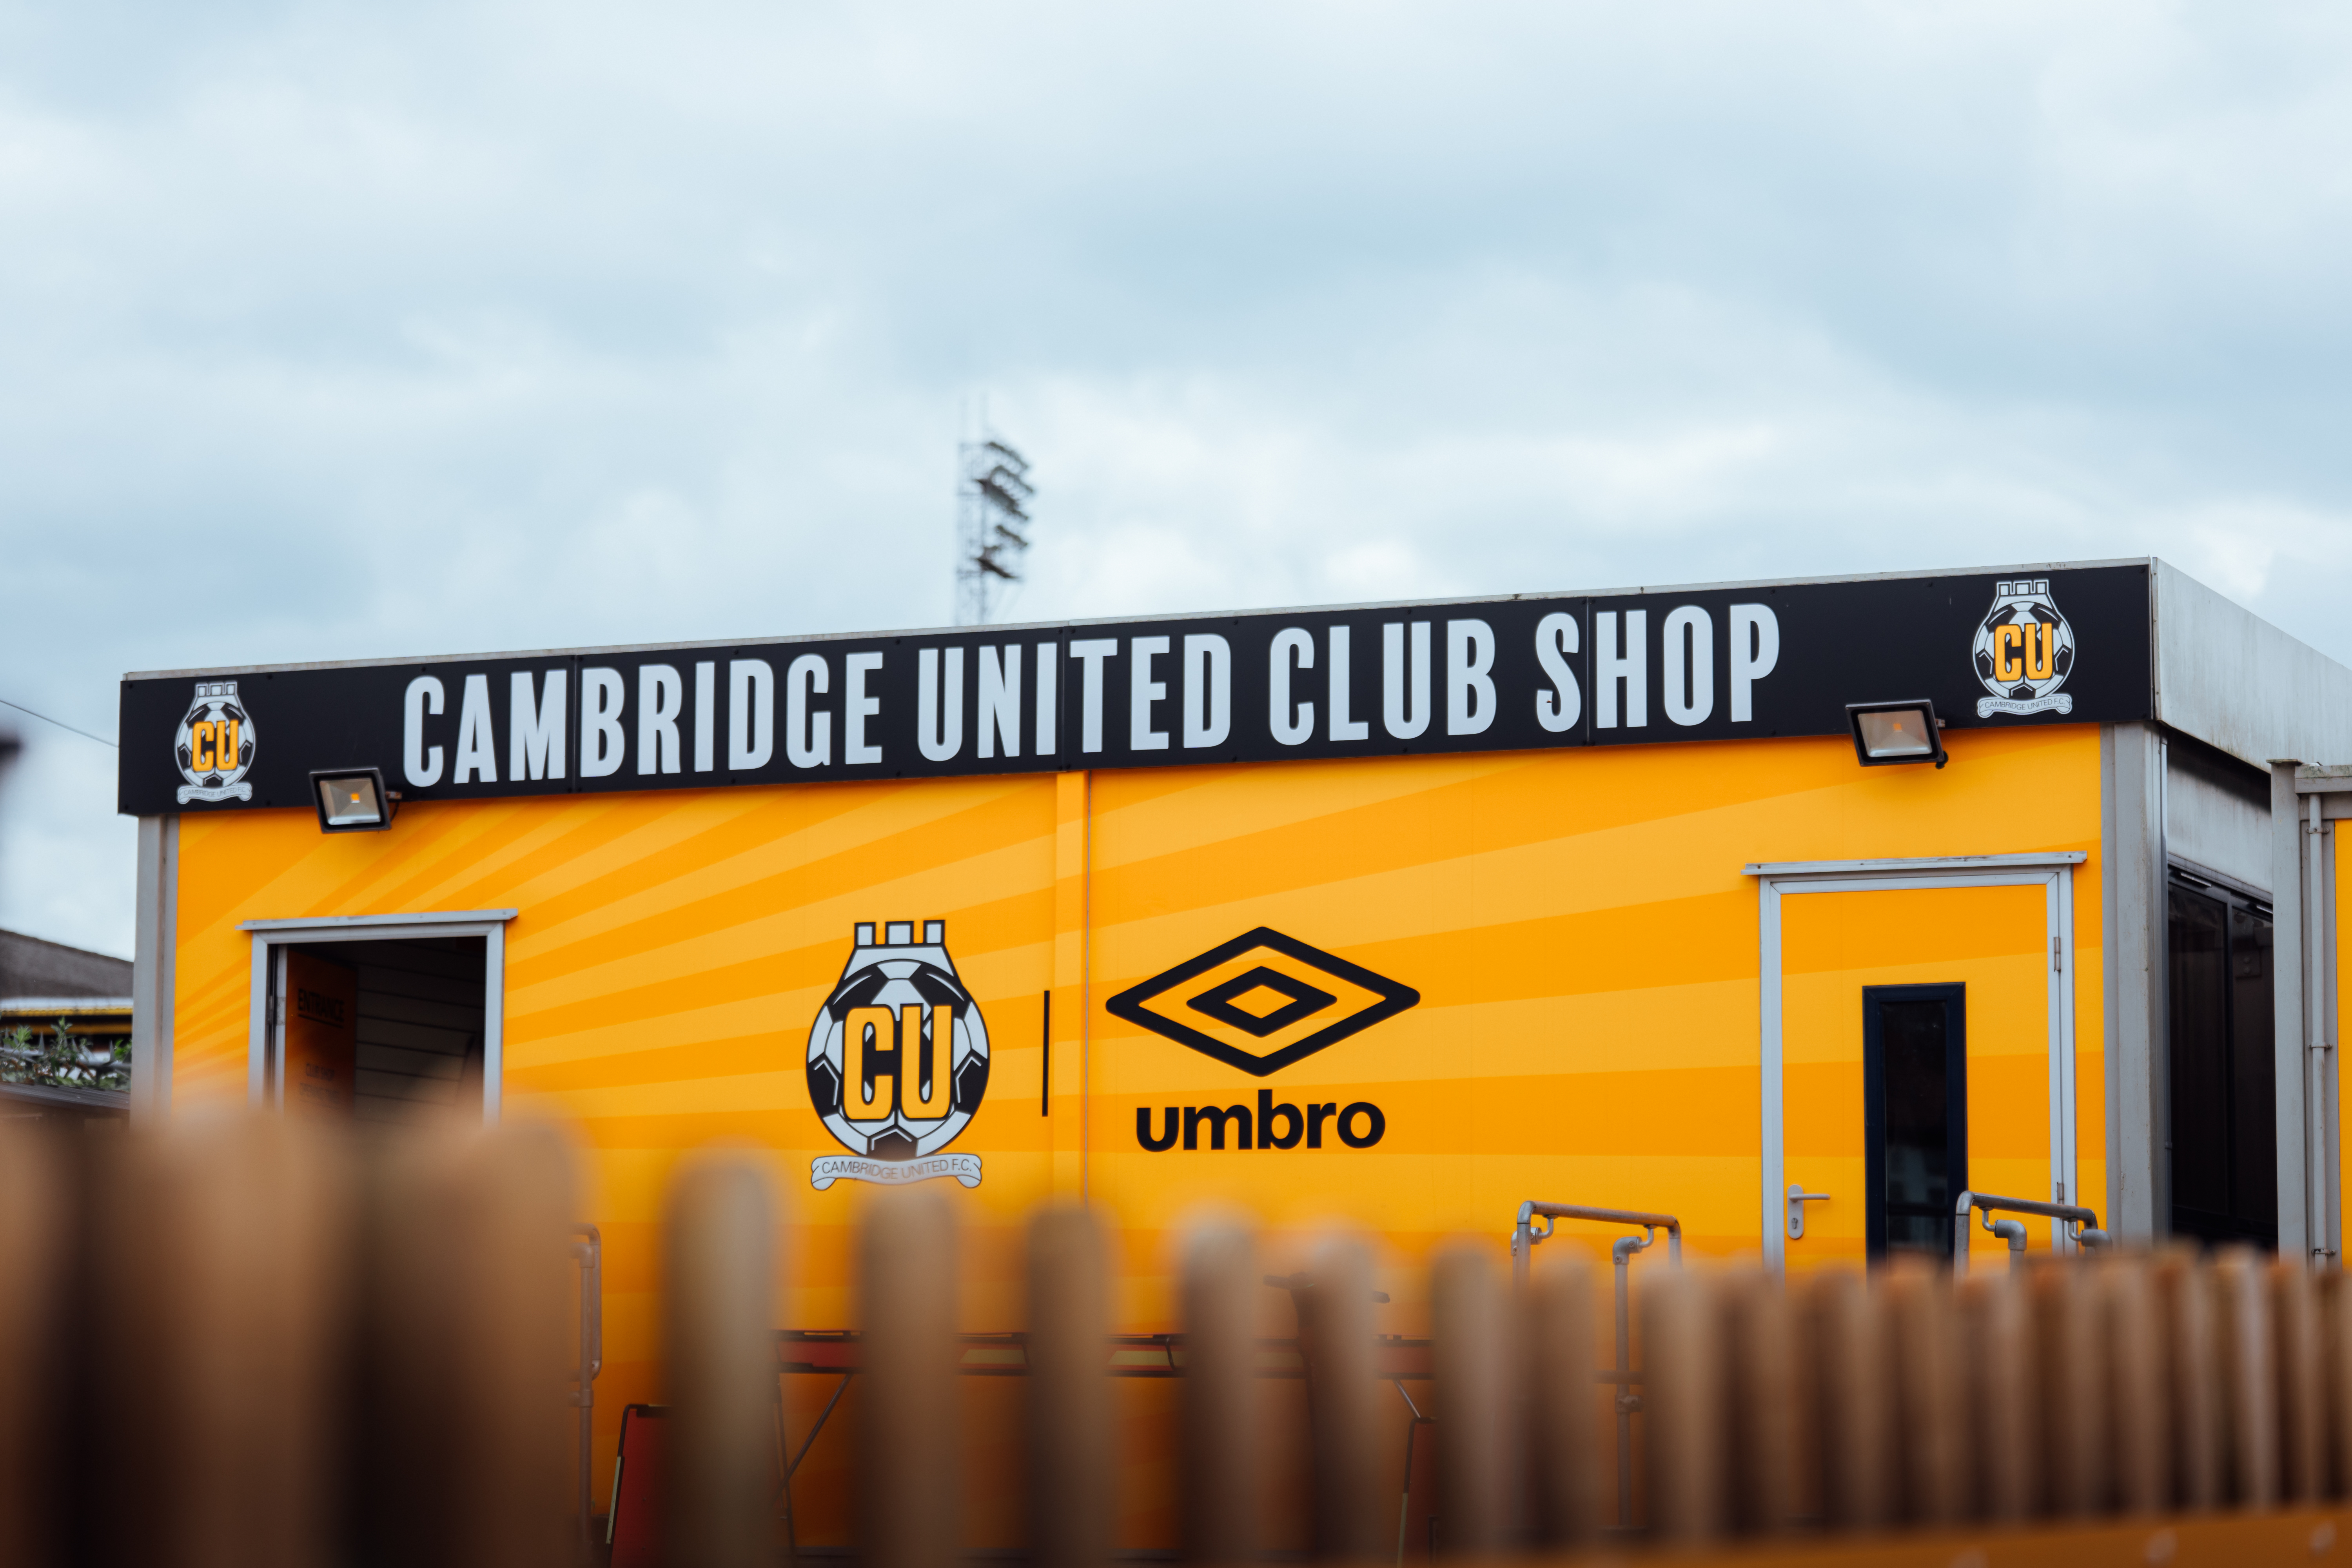 Cambridge United Club Shop